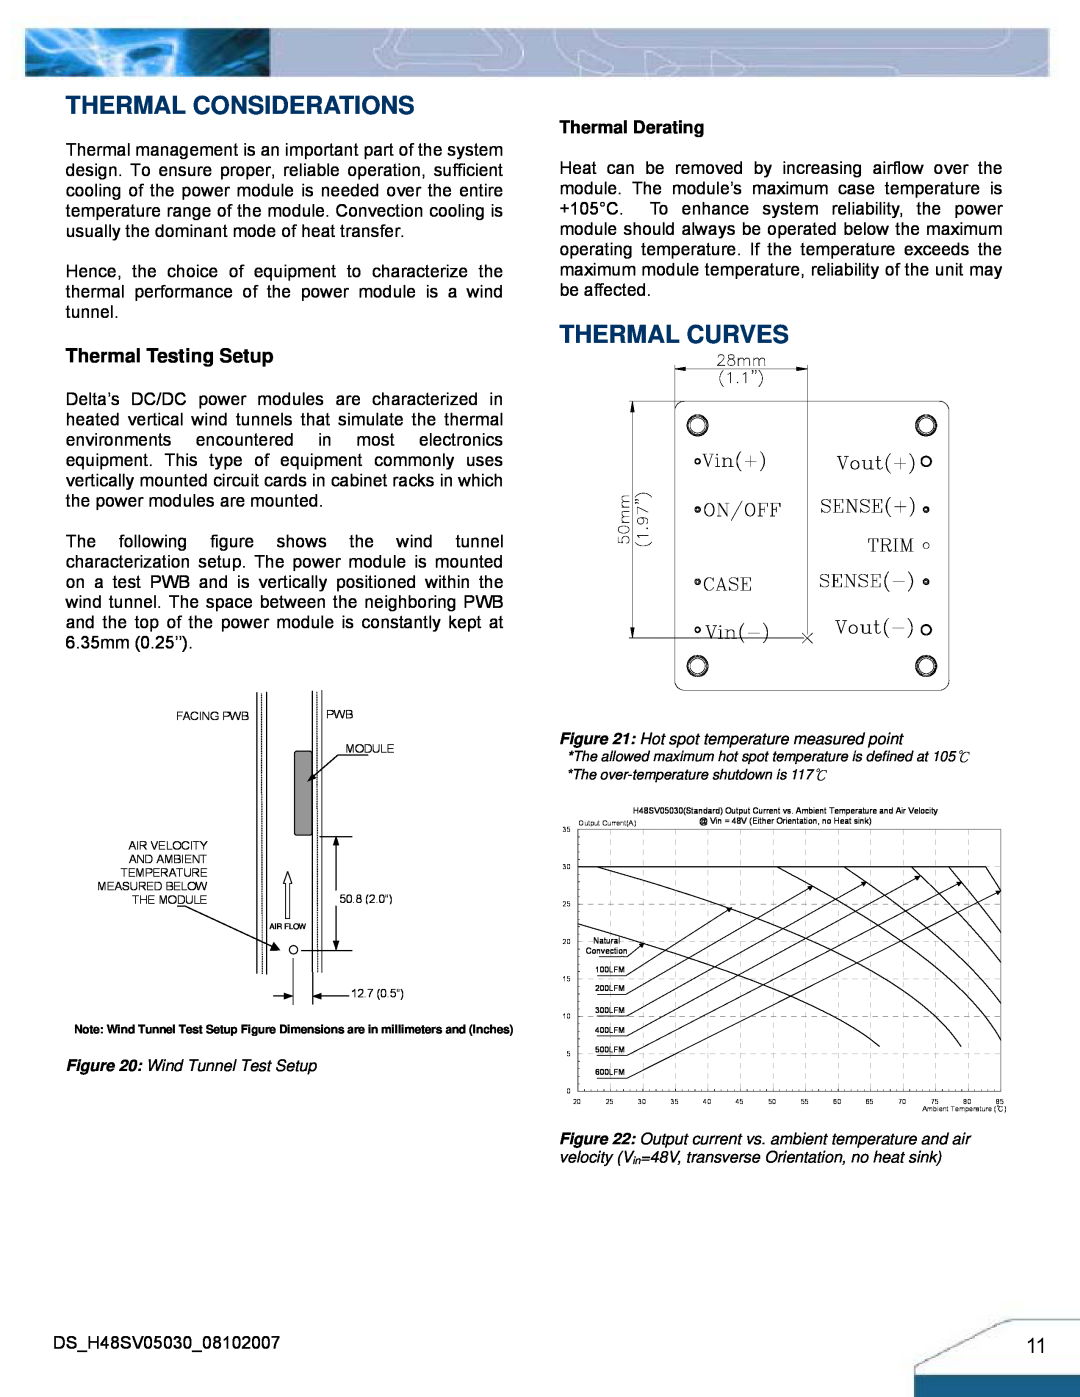 Delta Electronics H48SV manual Thermal Considerations, Thermal Curves, Thermal Testing Setup, Thermal Derating 